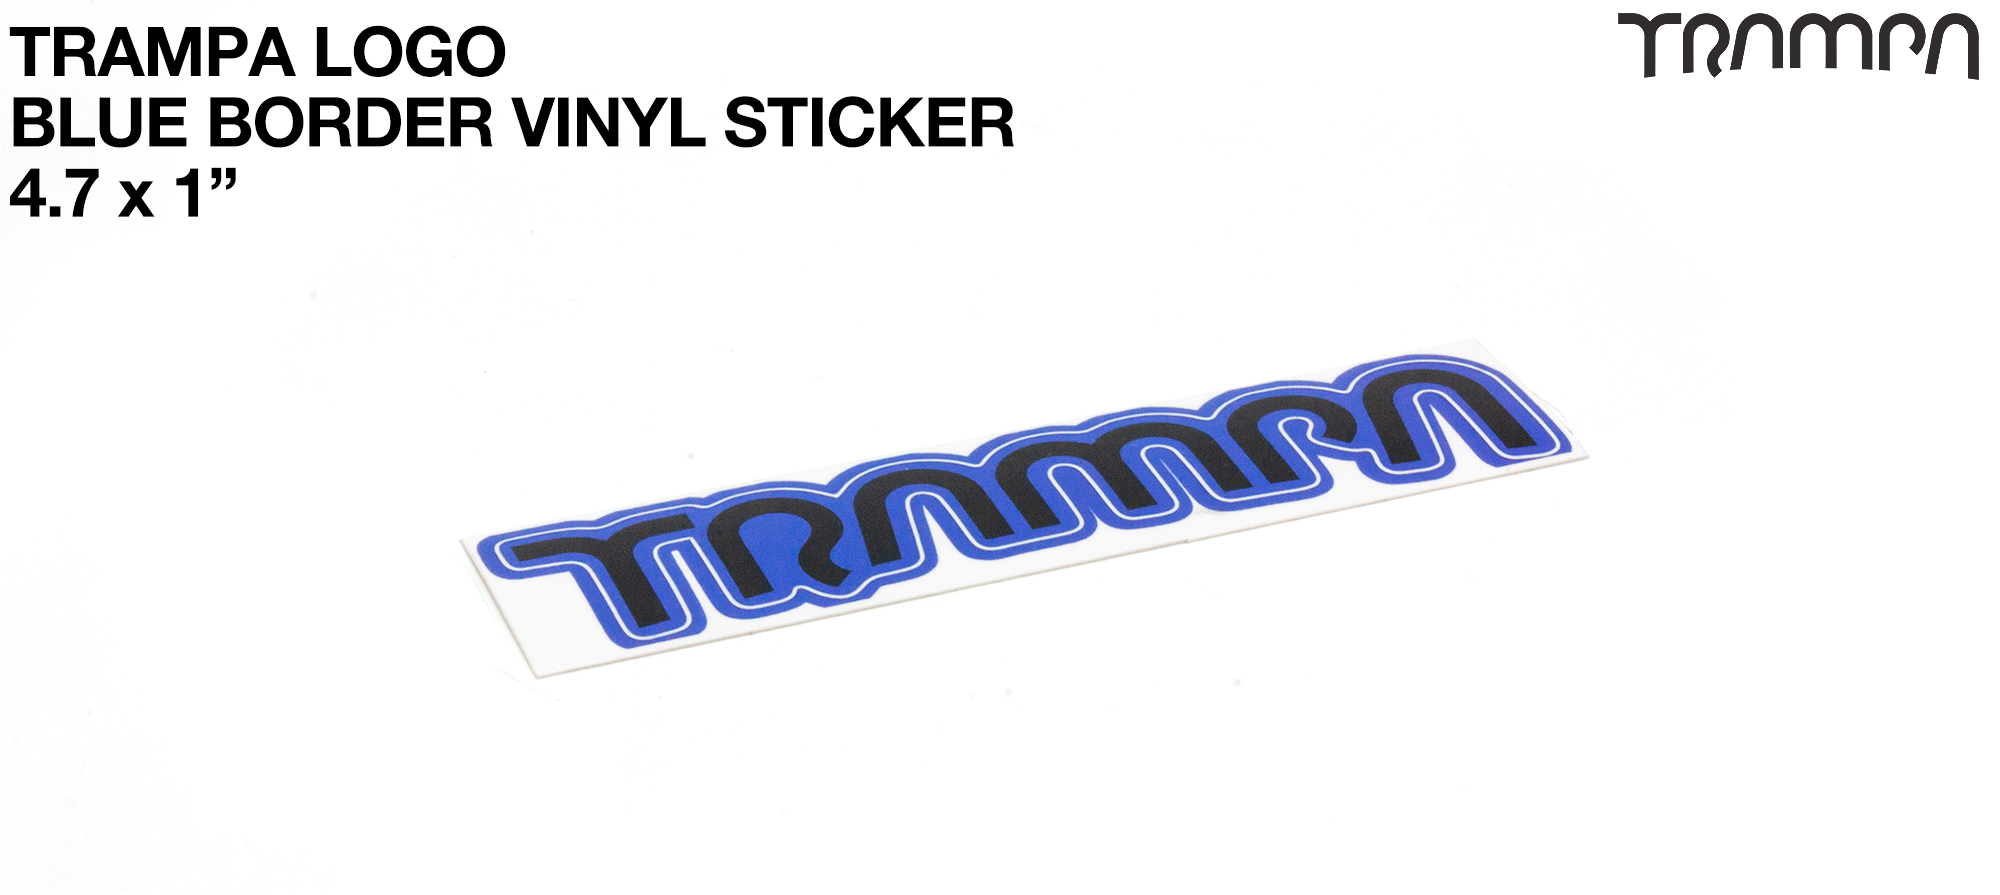 TRAMPA Sticker - BLUE